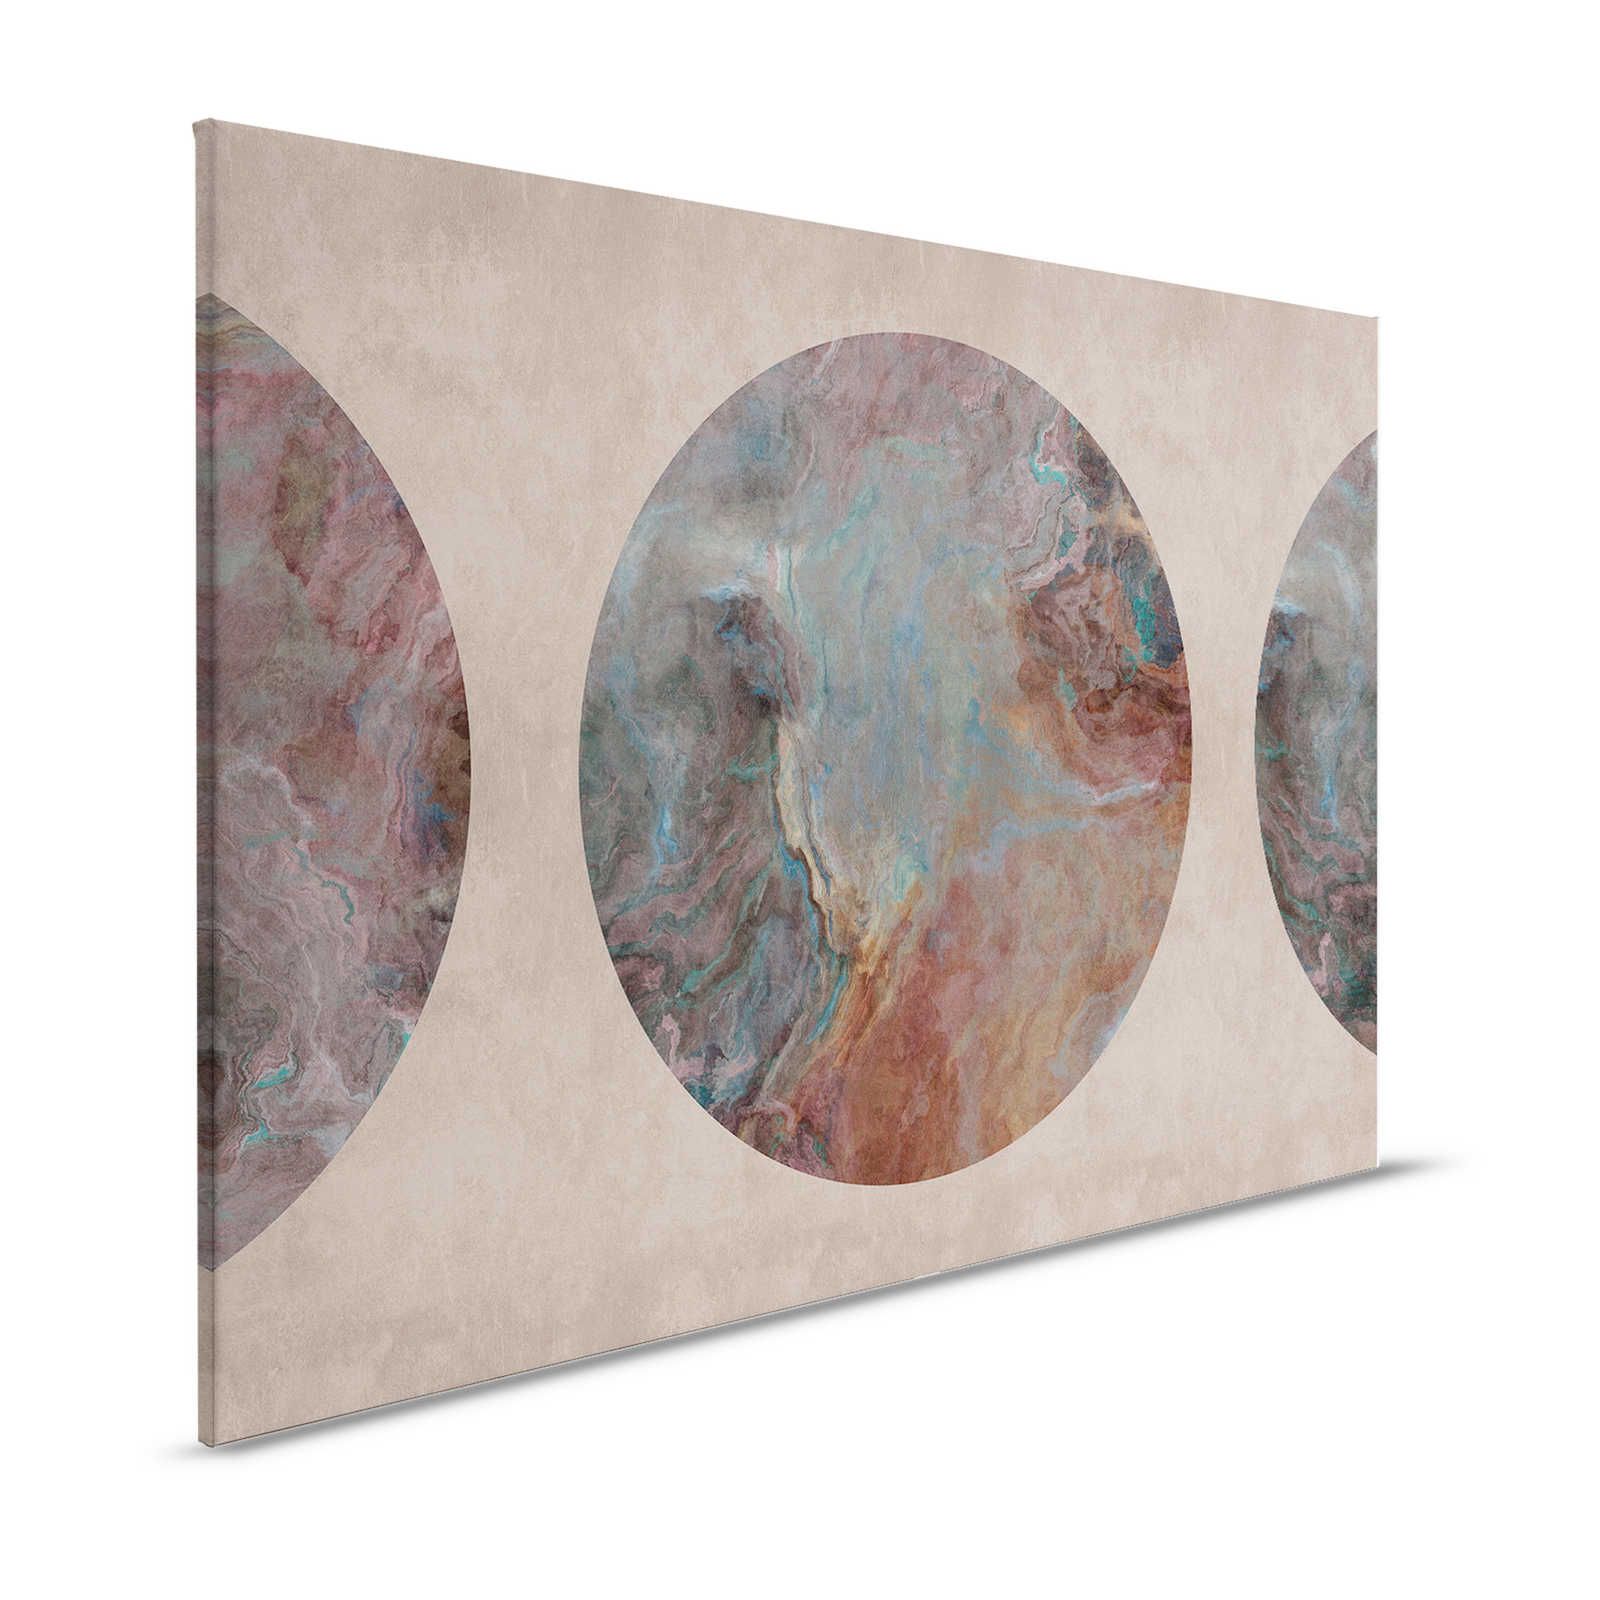 Jupiter 1 - Canvas painting marbled stone circle motif - 1.20 m x 0.80 m
